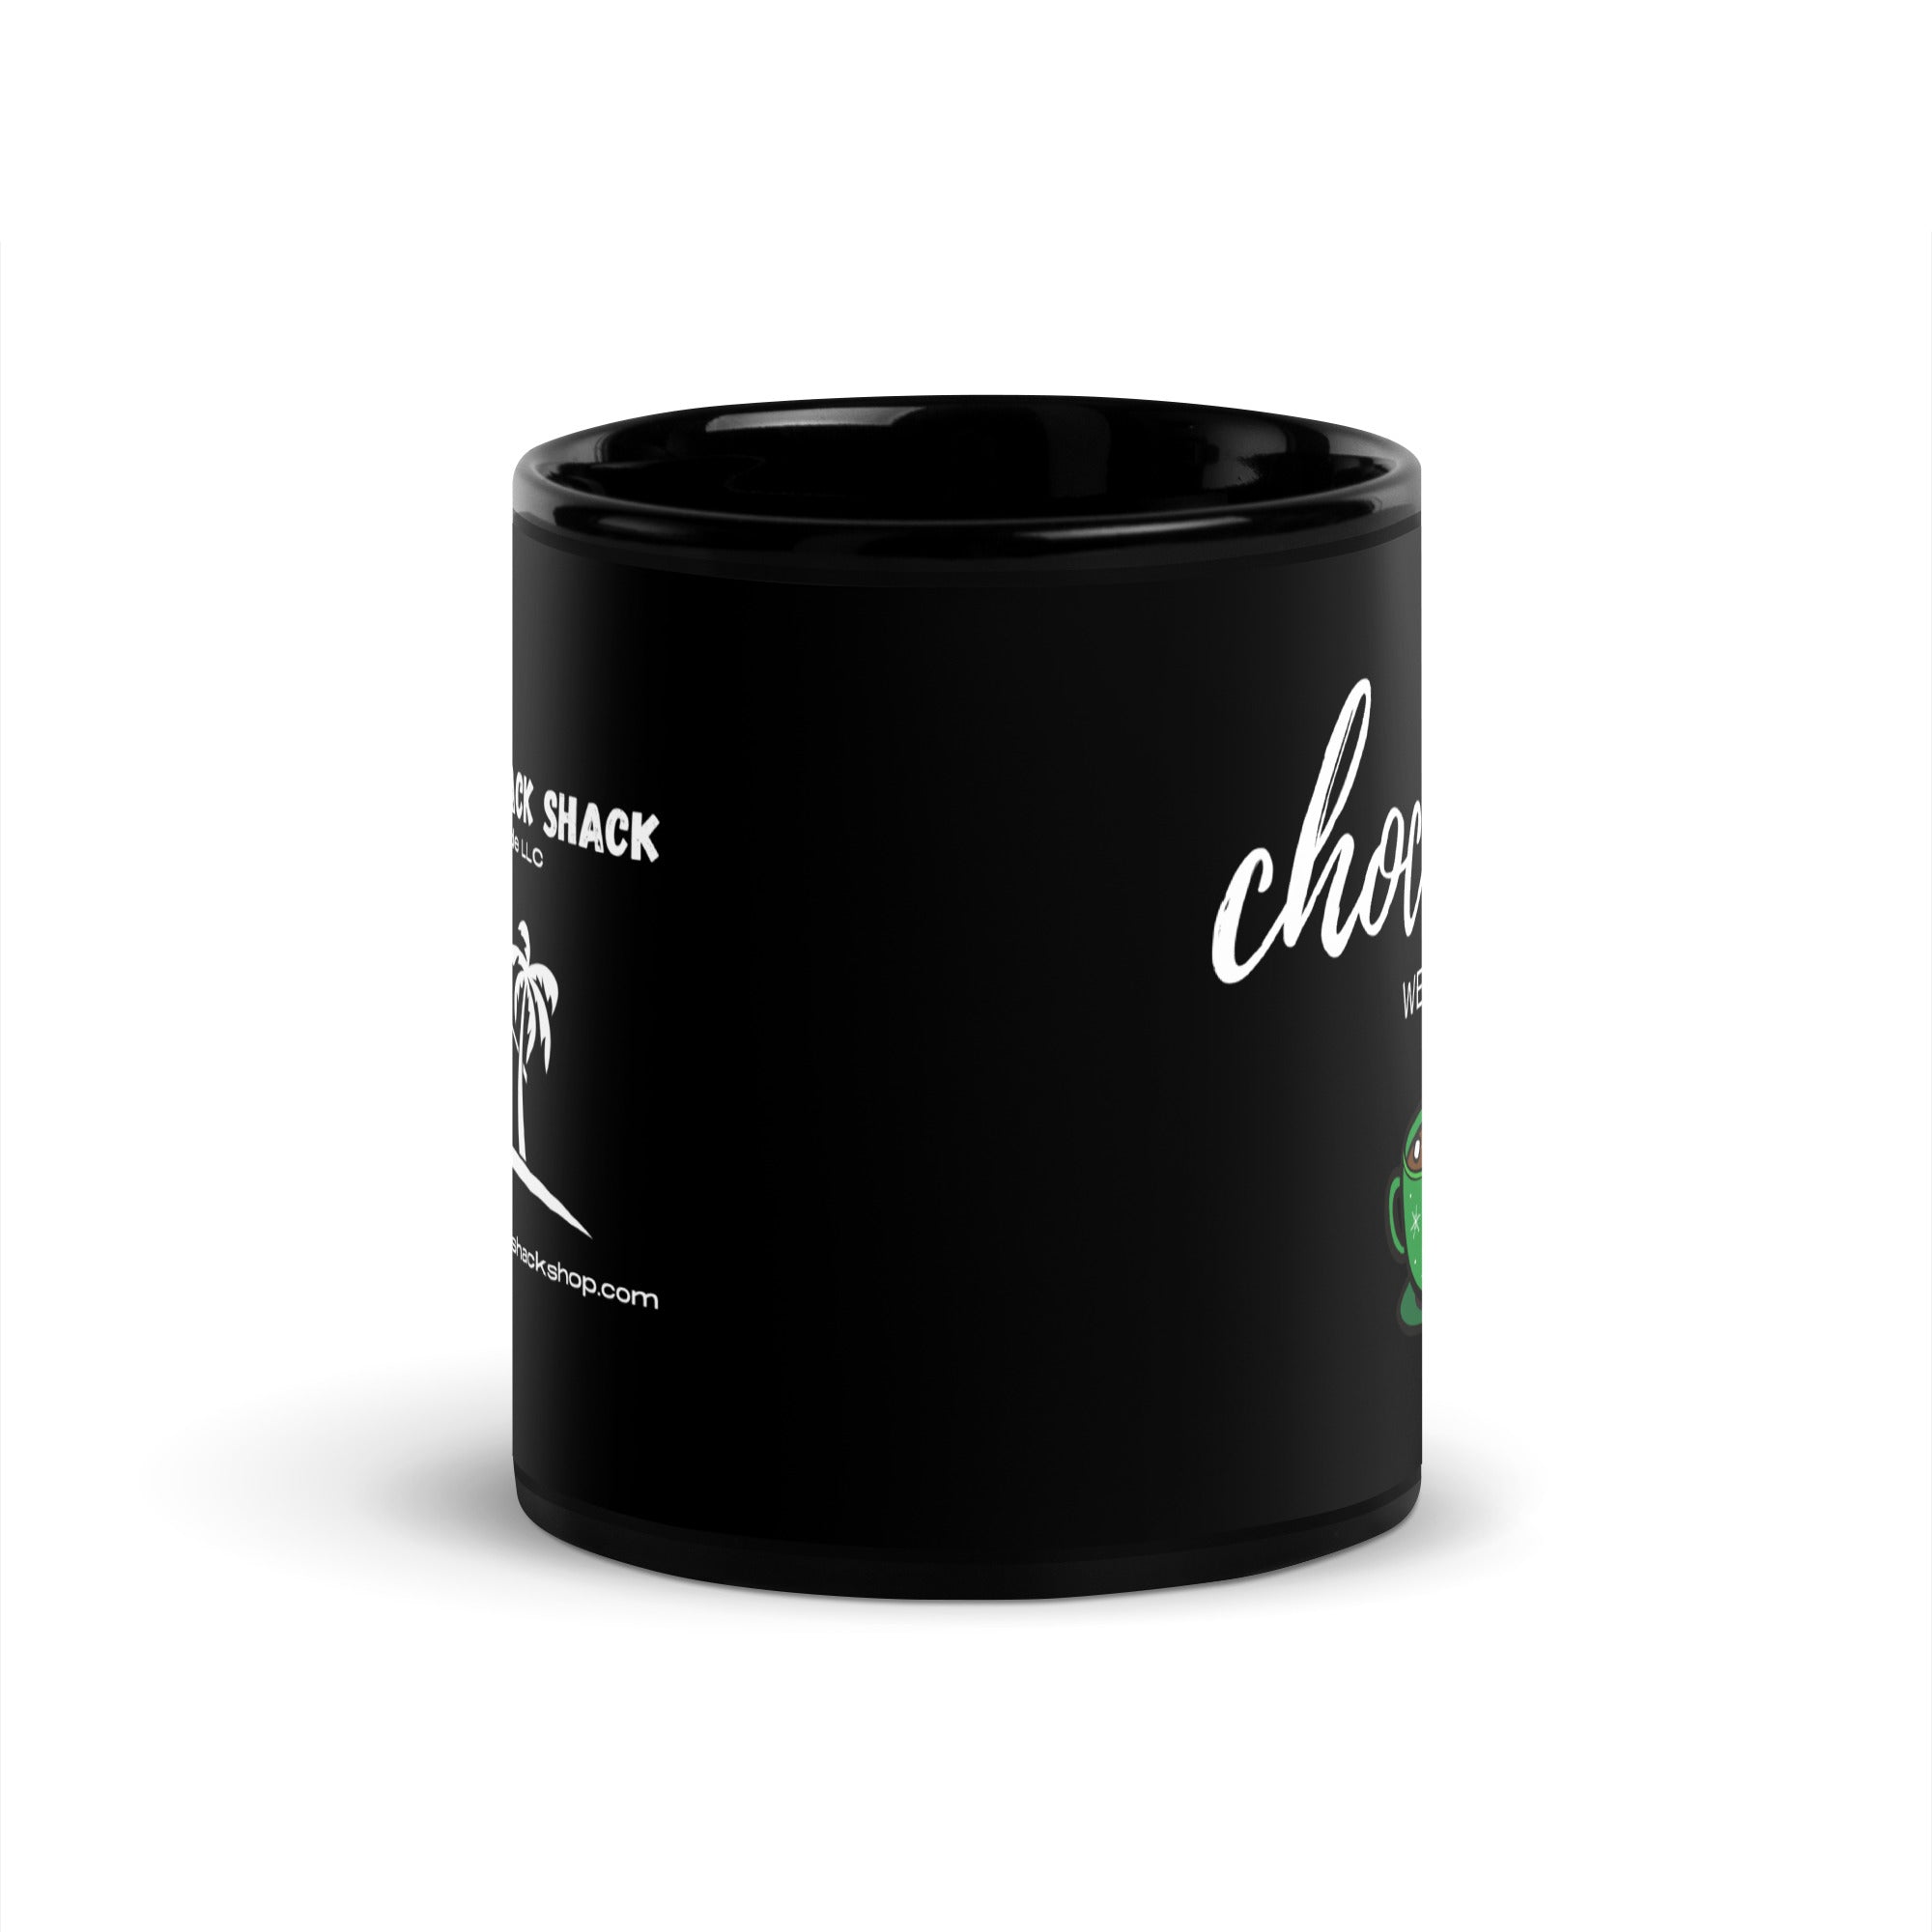 Black Glossy Mug - Hot Chocolate Weather (L-Handed)